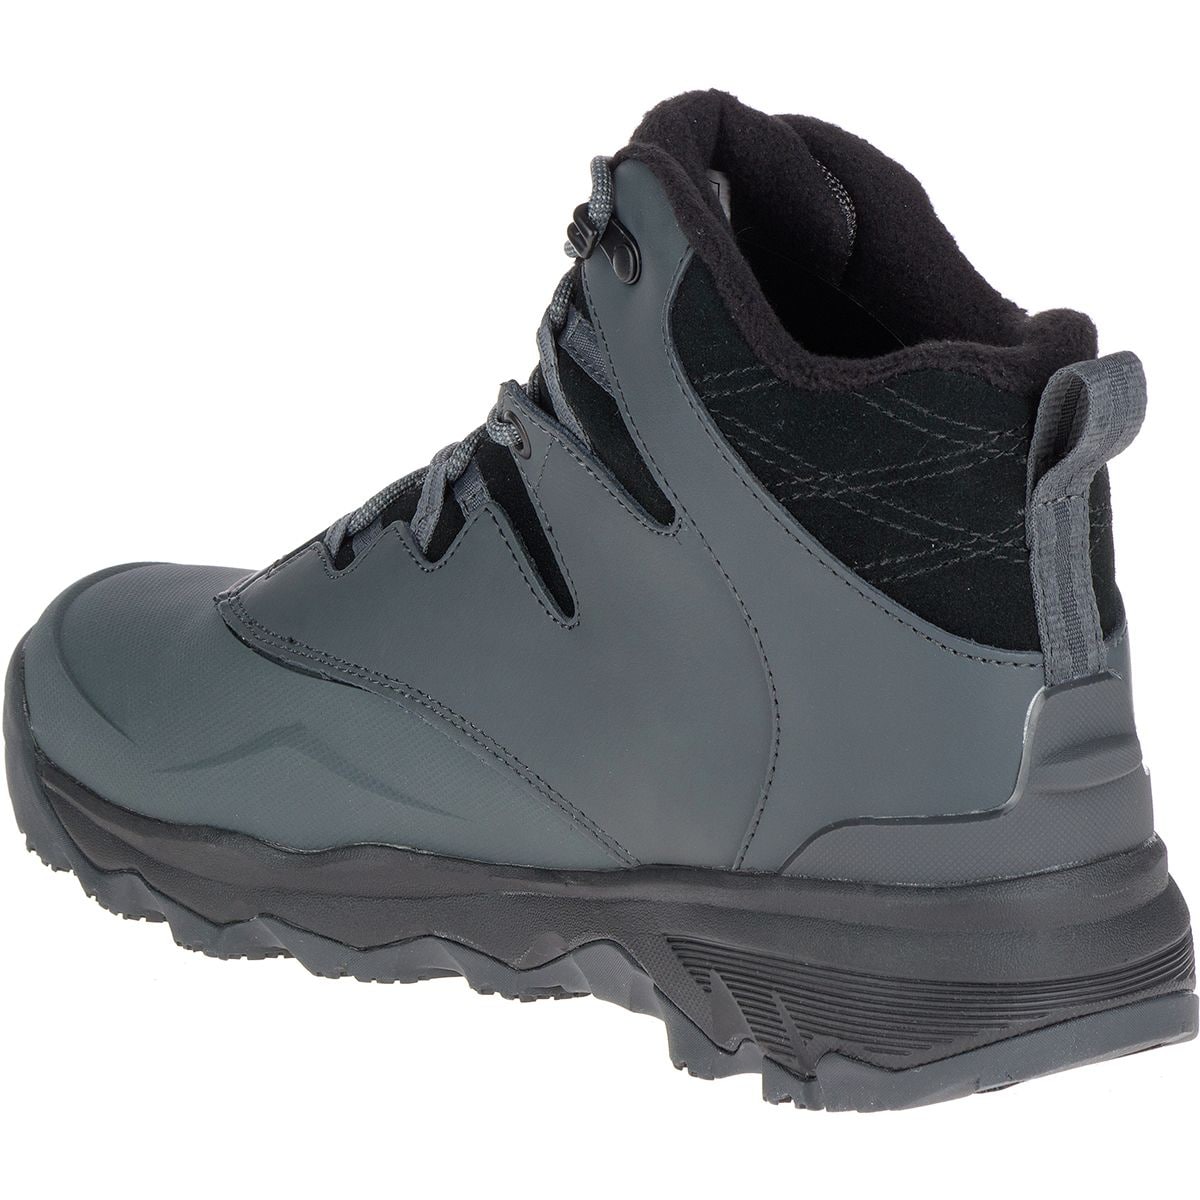 Merrell Thermo Adventure Ice+ 6in Waterproof Boot - Men's - Footwear